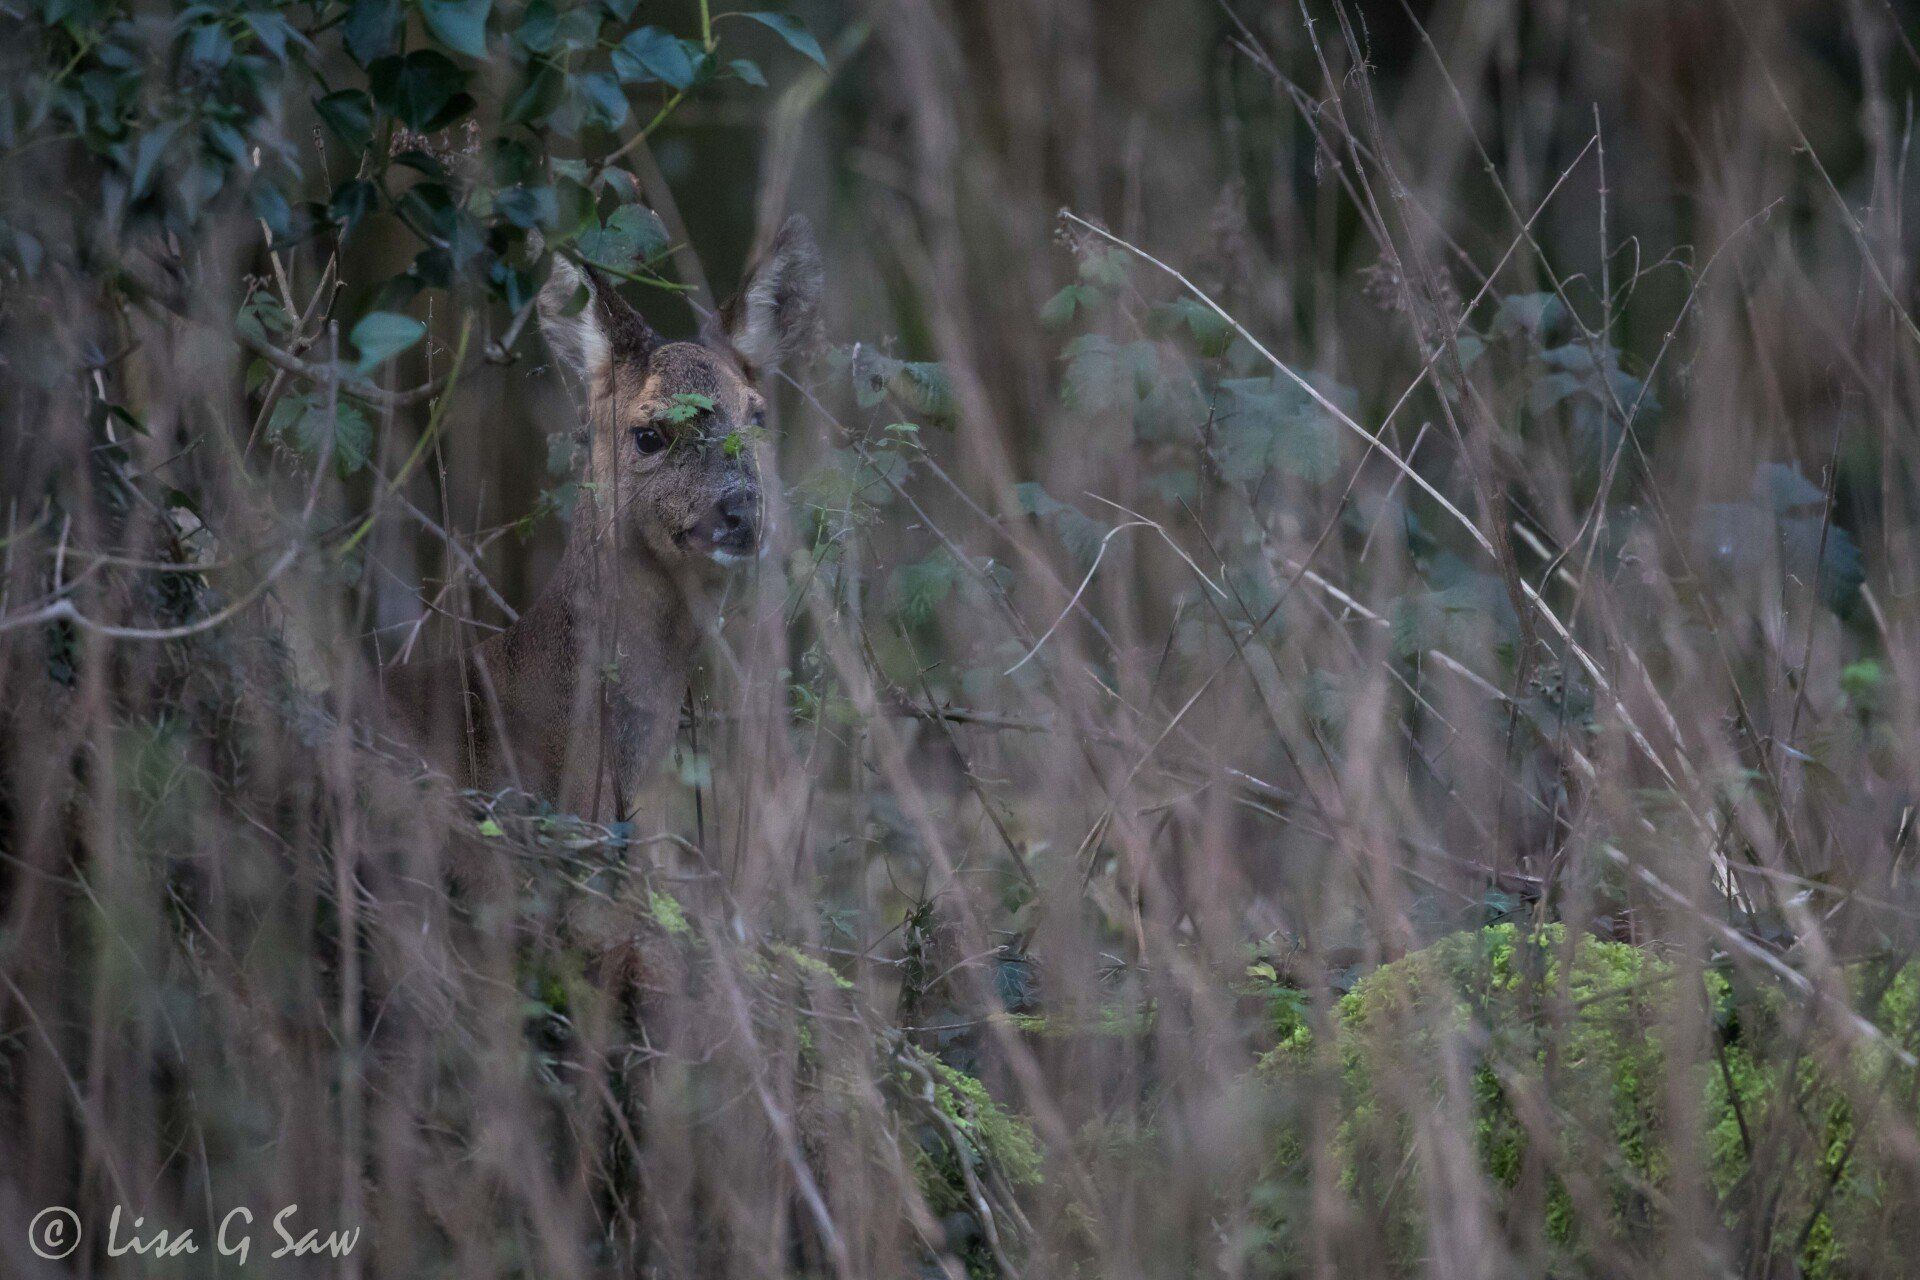 Female Roe Deer hiding behind tall grass